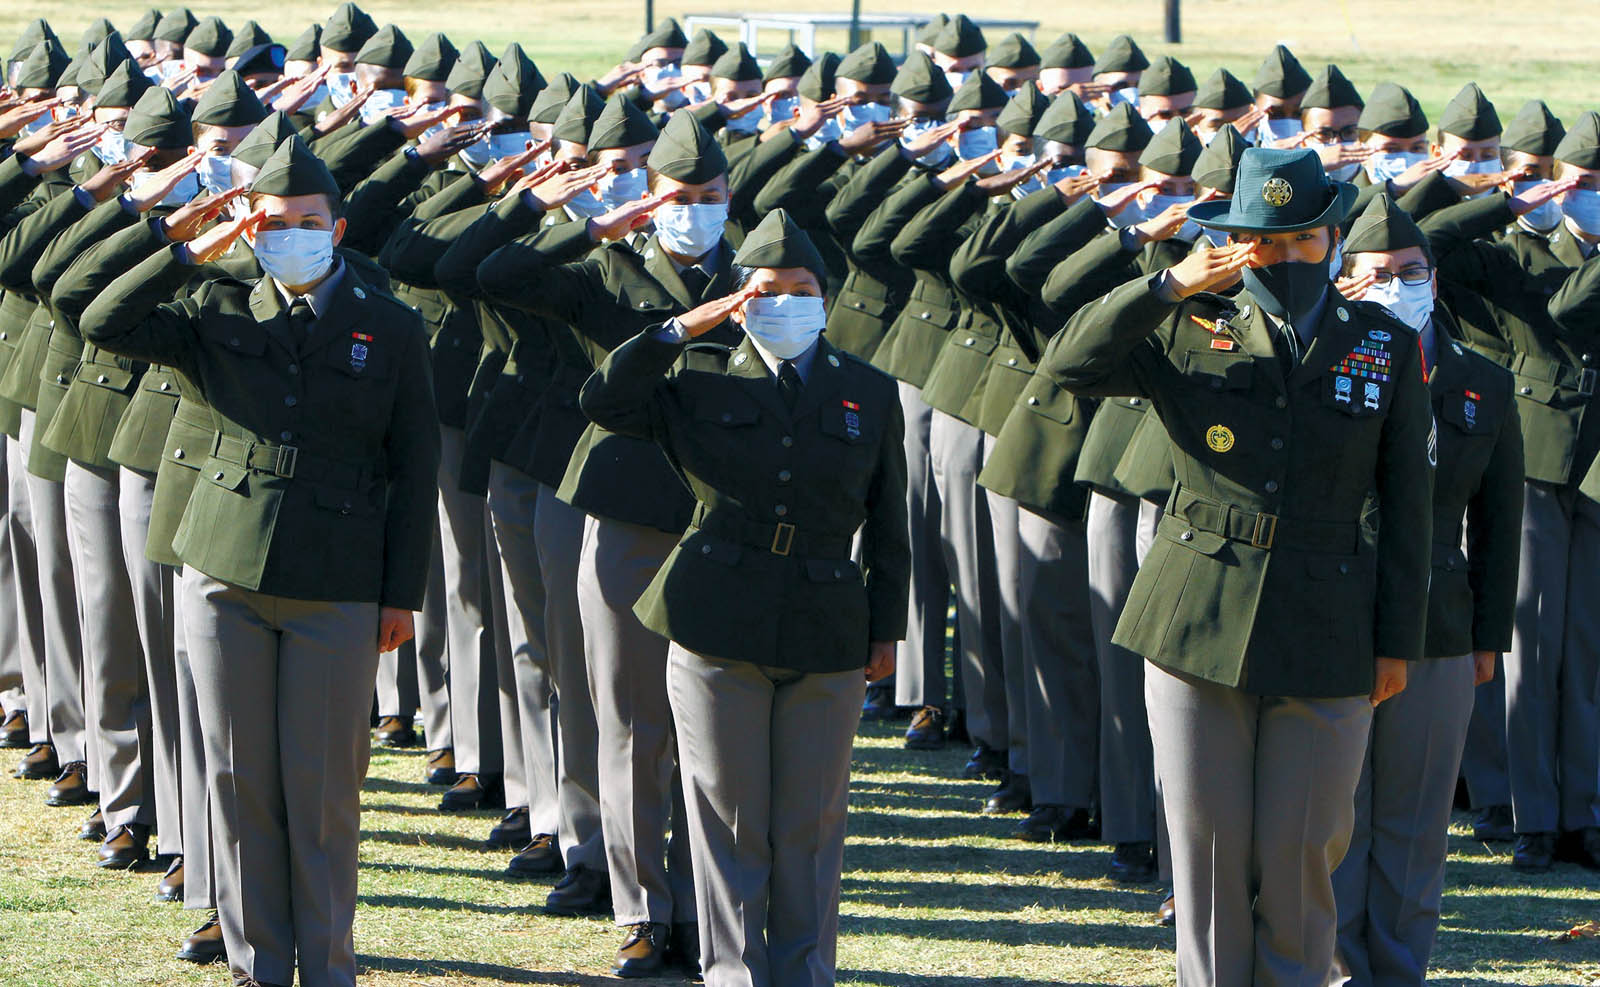 SourceAmerica and NIB deliver U.S. Army's new dress uniforms